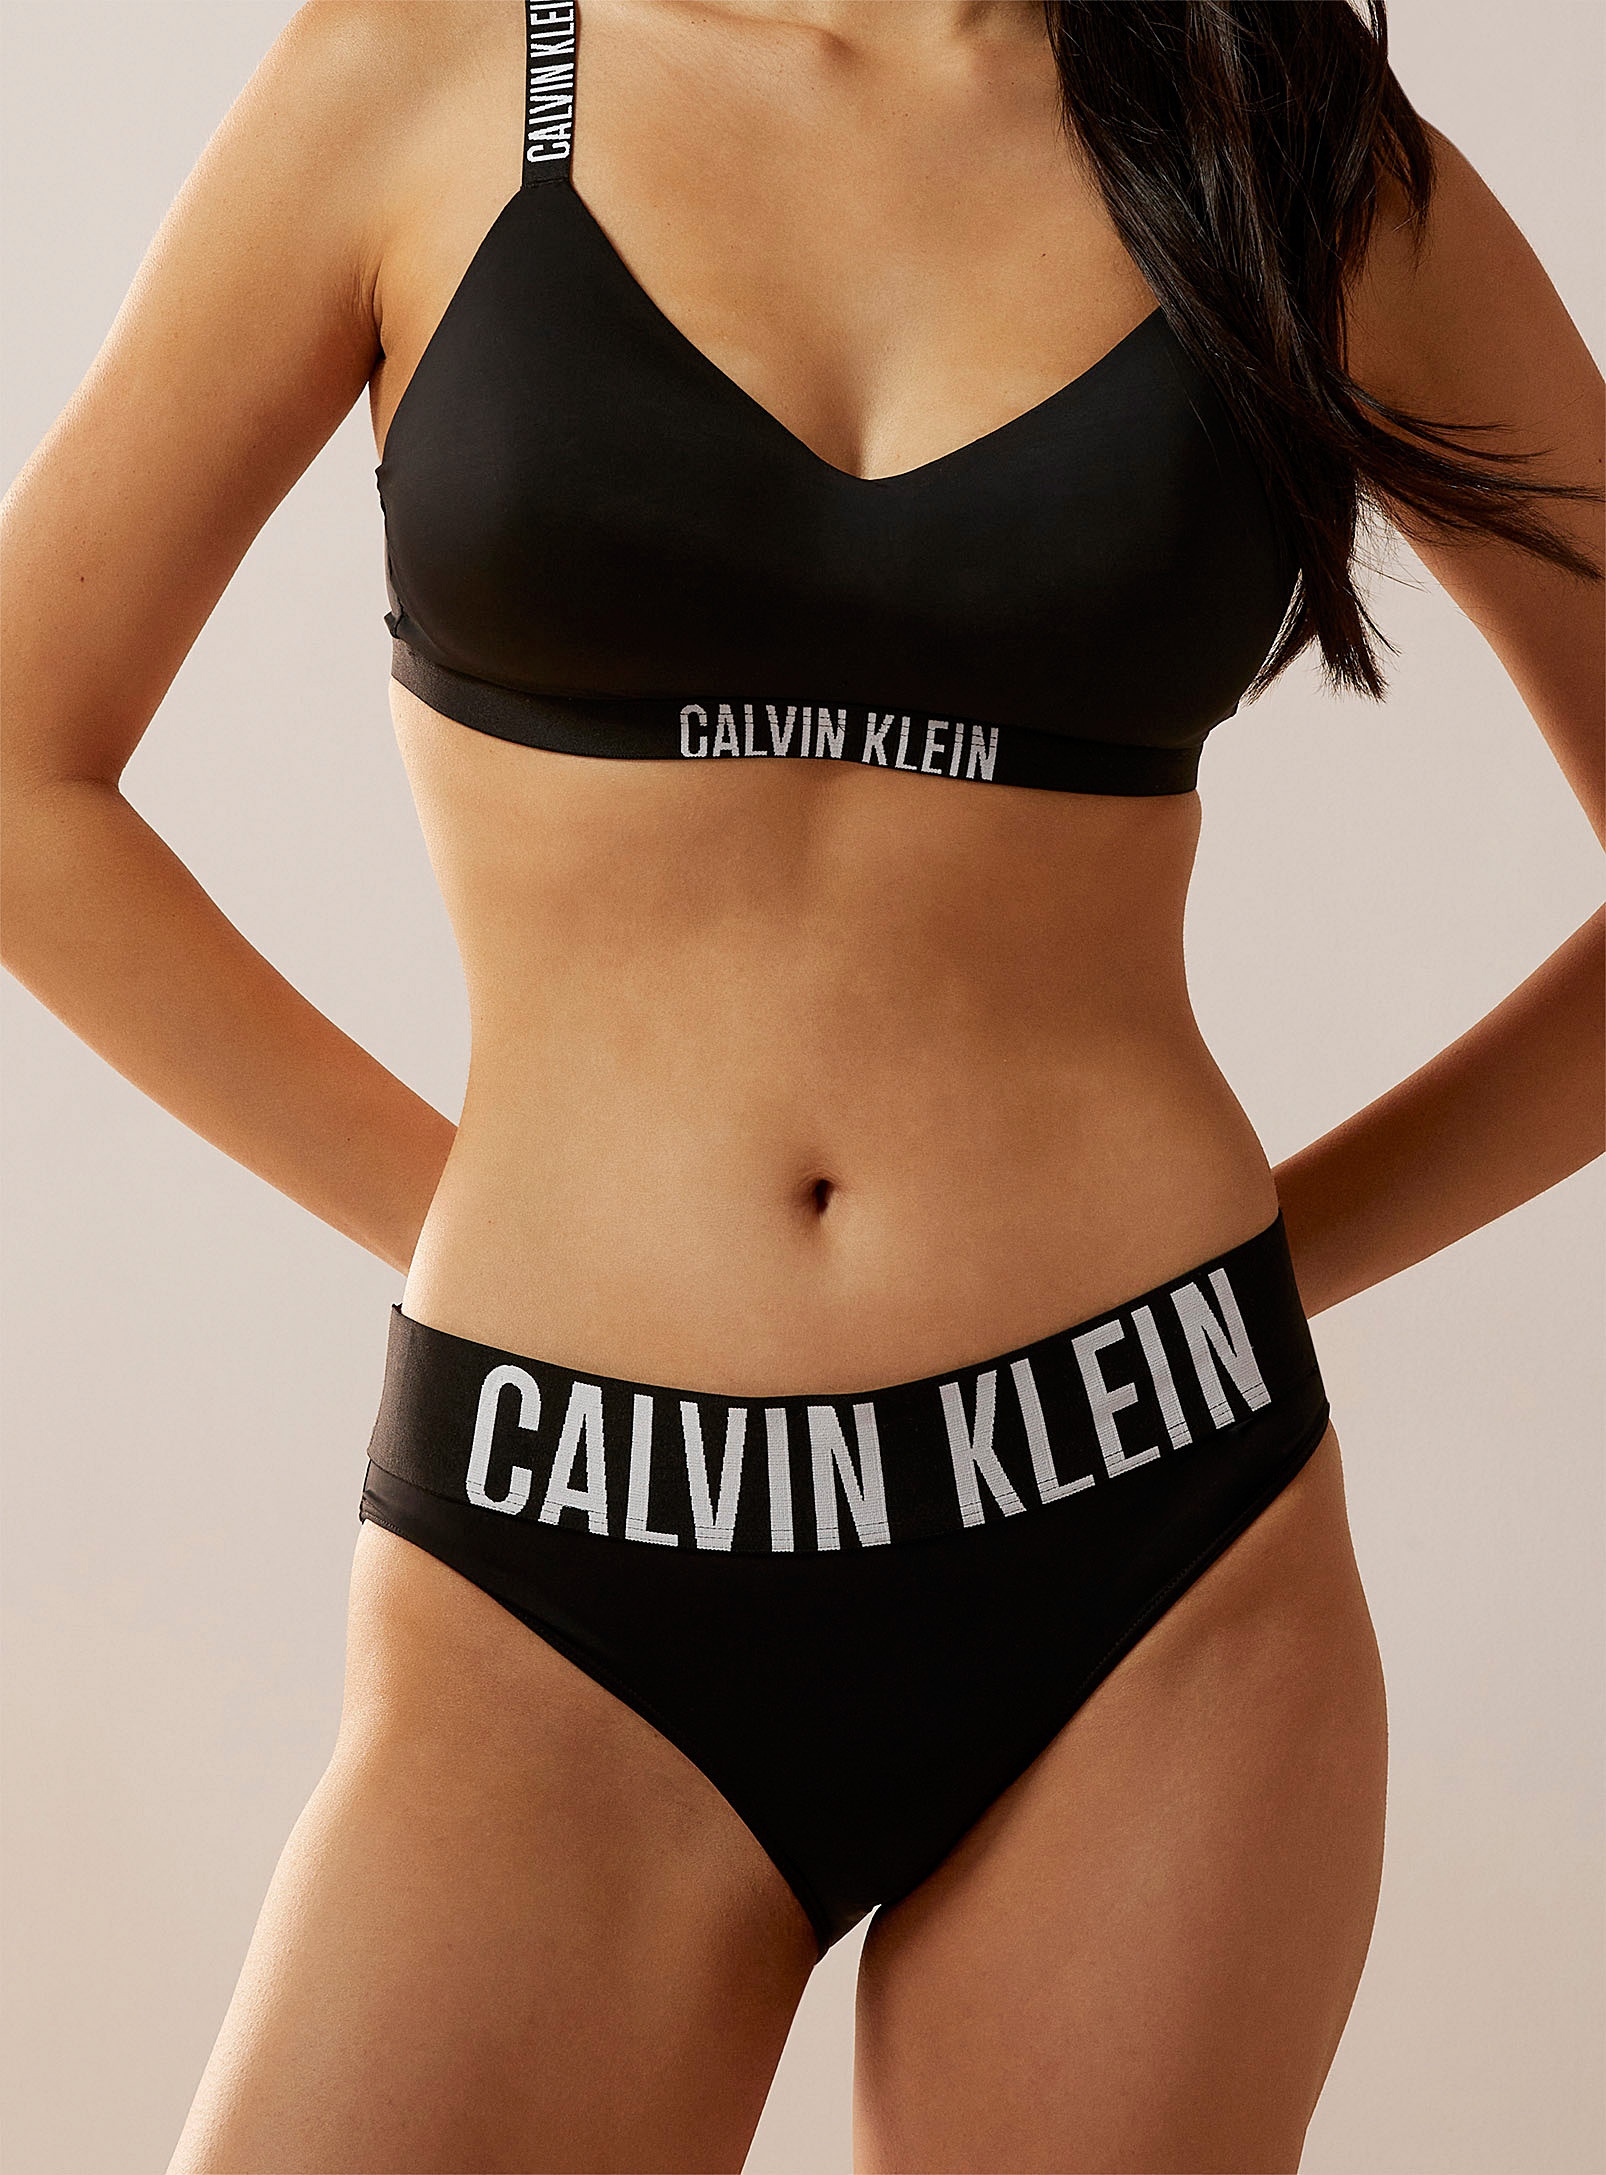 CCalvin Klein - Women's Contrasting logo waist bikini panty